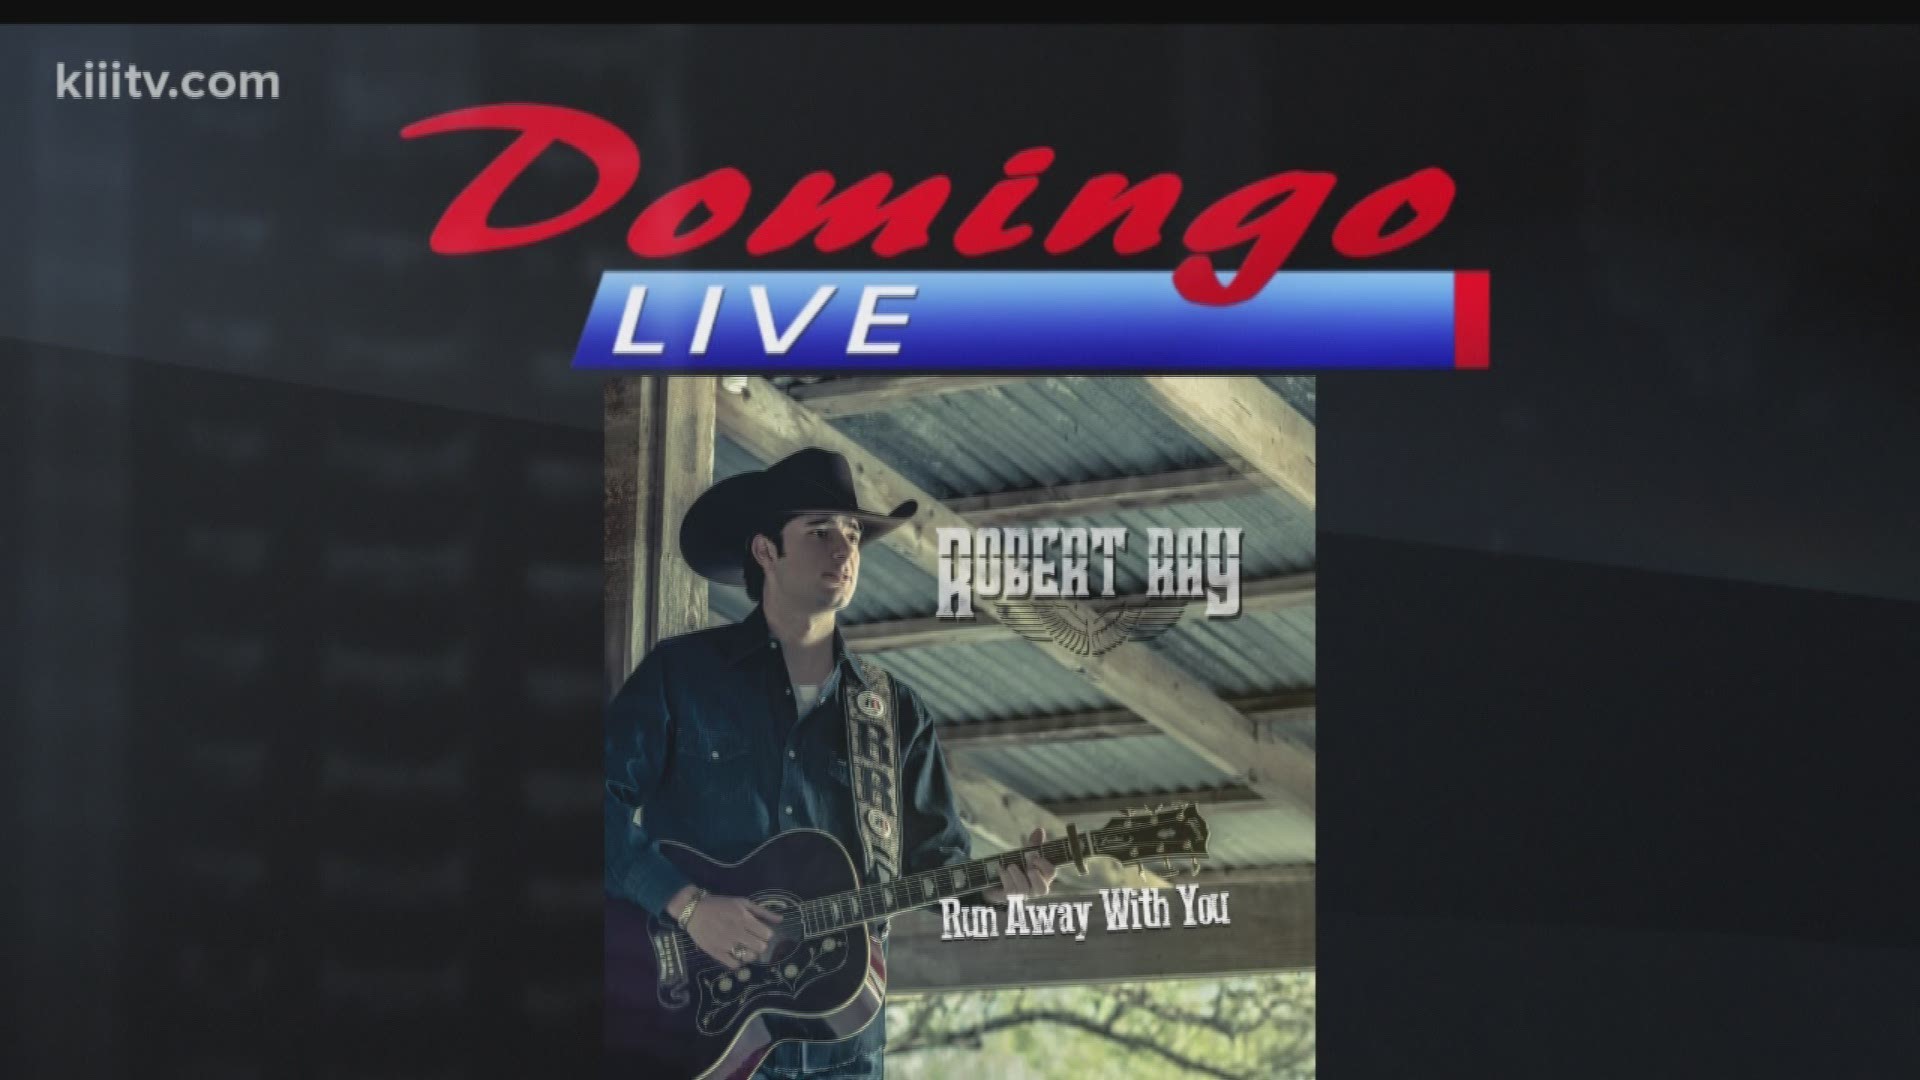 Robert Ray Performing on Domingo Live!